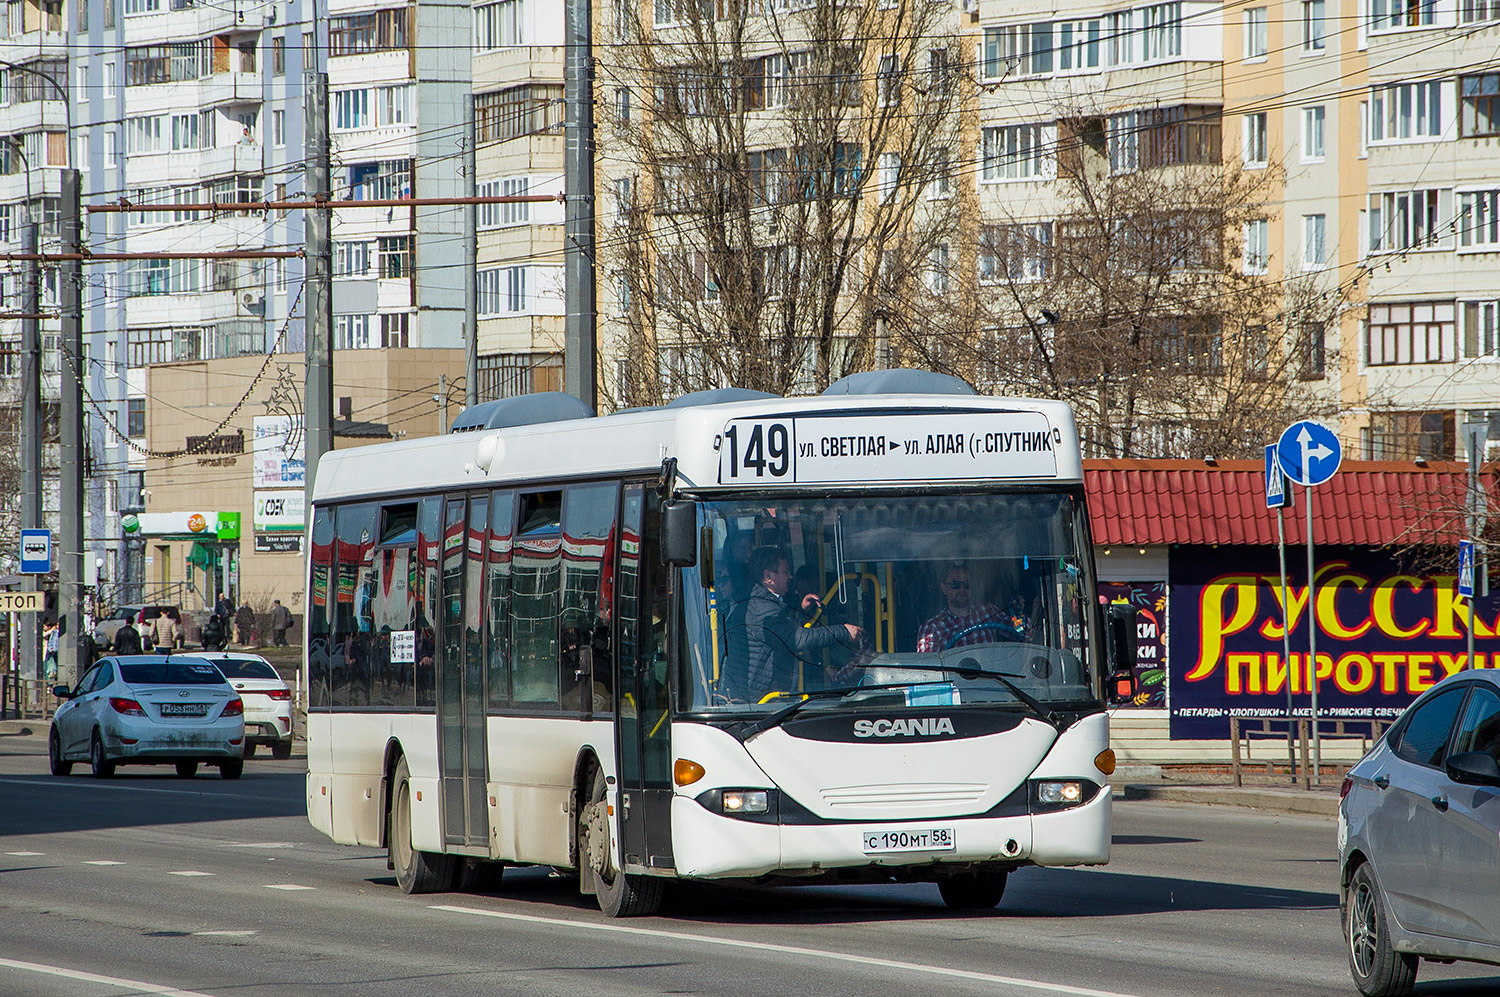 Penza region, Scania OmniLink I (Scania-St.Petersburg) Nr. С 190 МТ 58